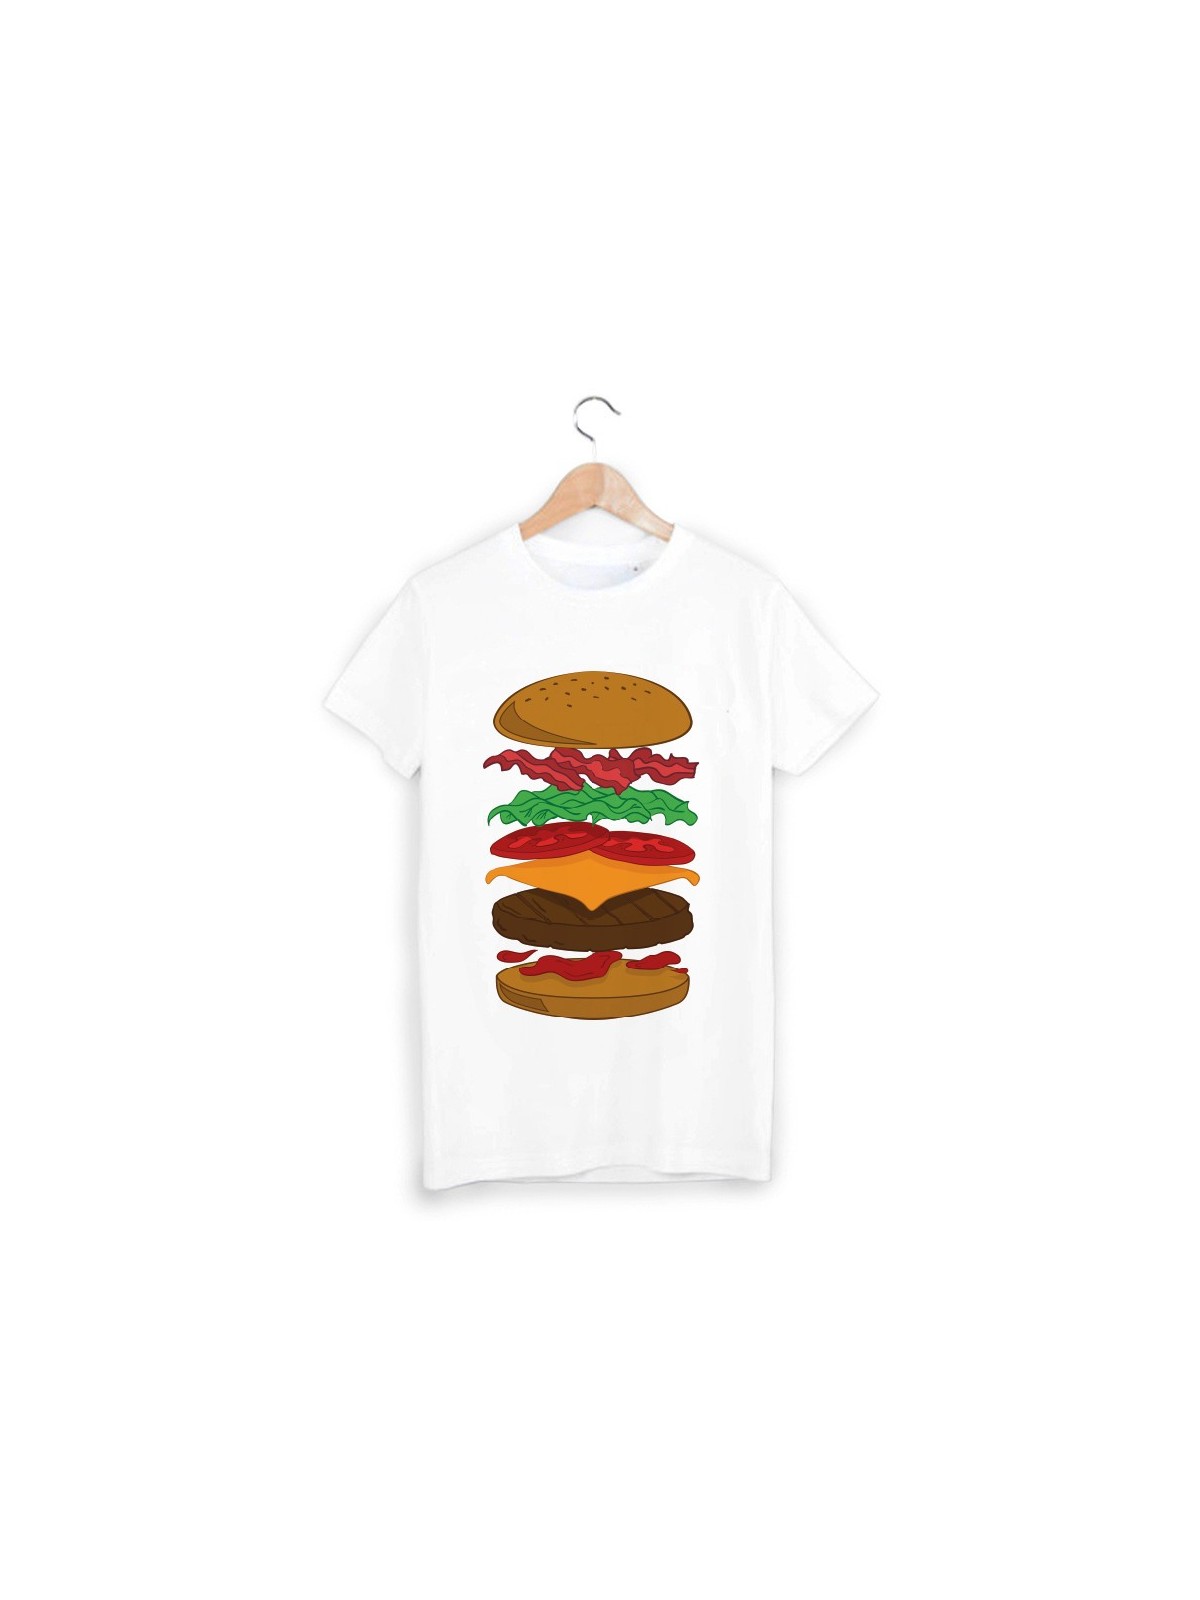 T-Shirt hamburger ref 837